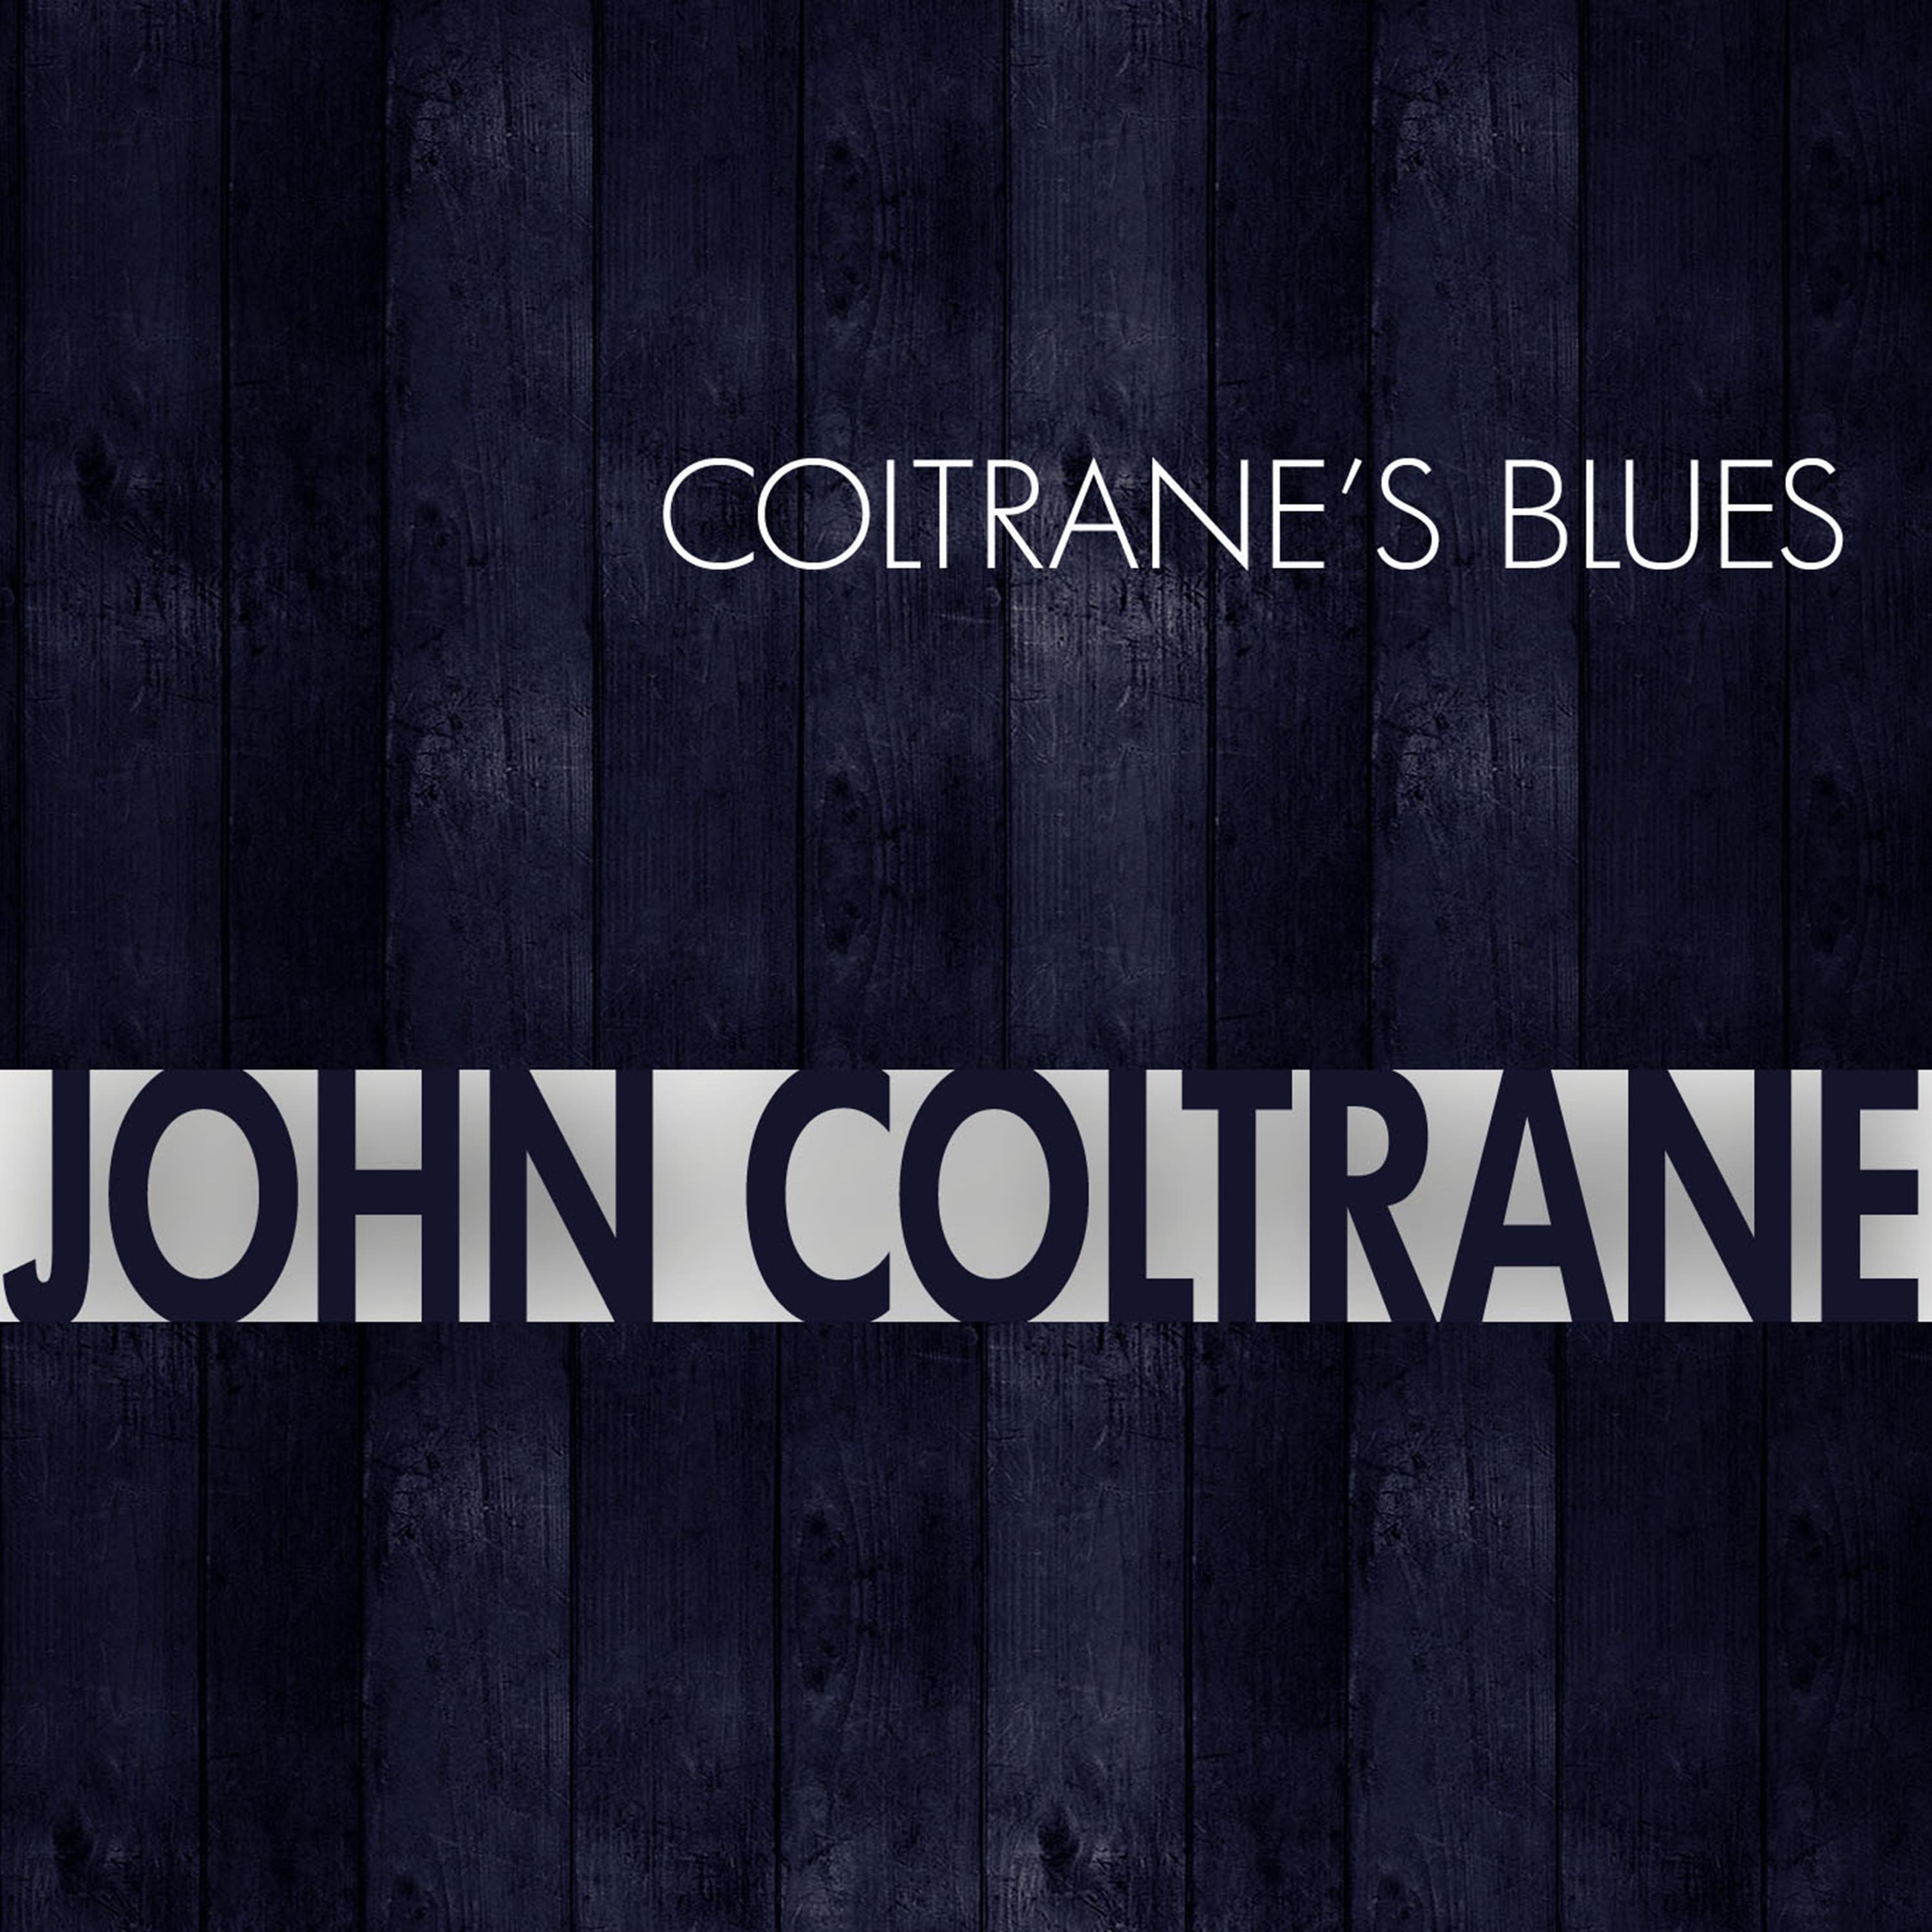 Coltrane's Jazz